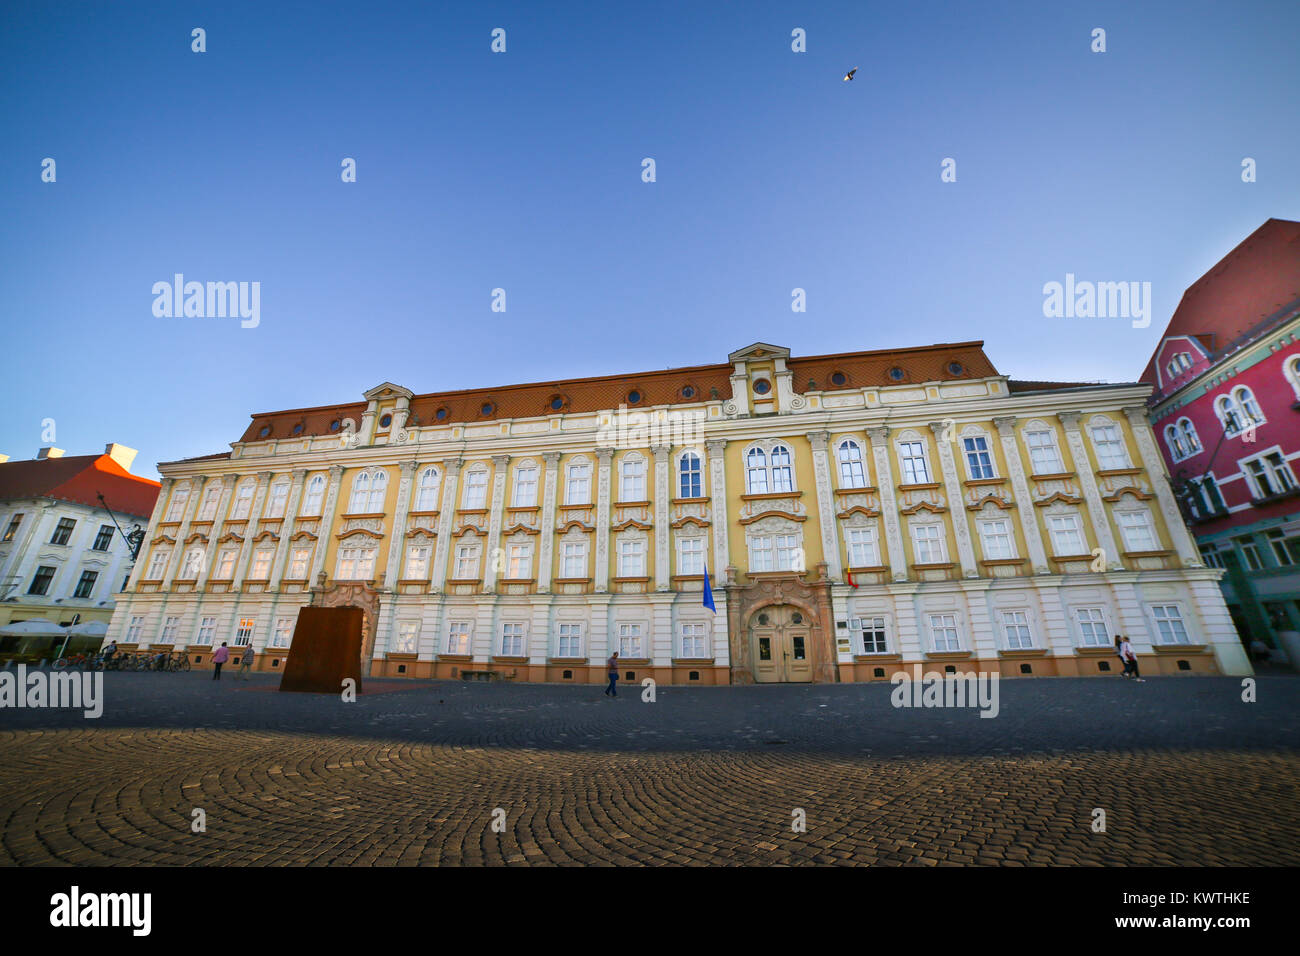 The Baroque Palace - The Art Museum in Piata Unirii (Union Square) in  Timisoara, Romania Stock Photo - Alamy